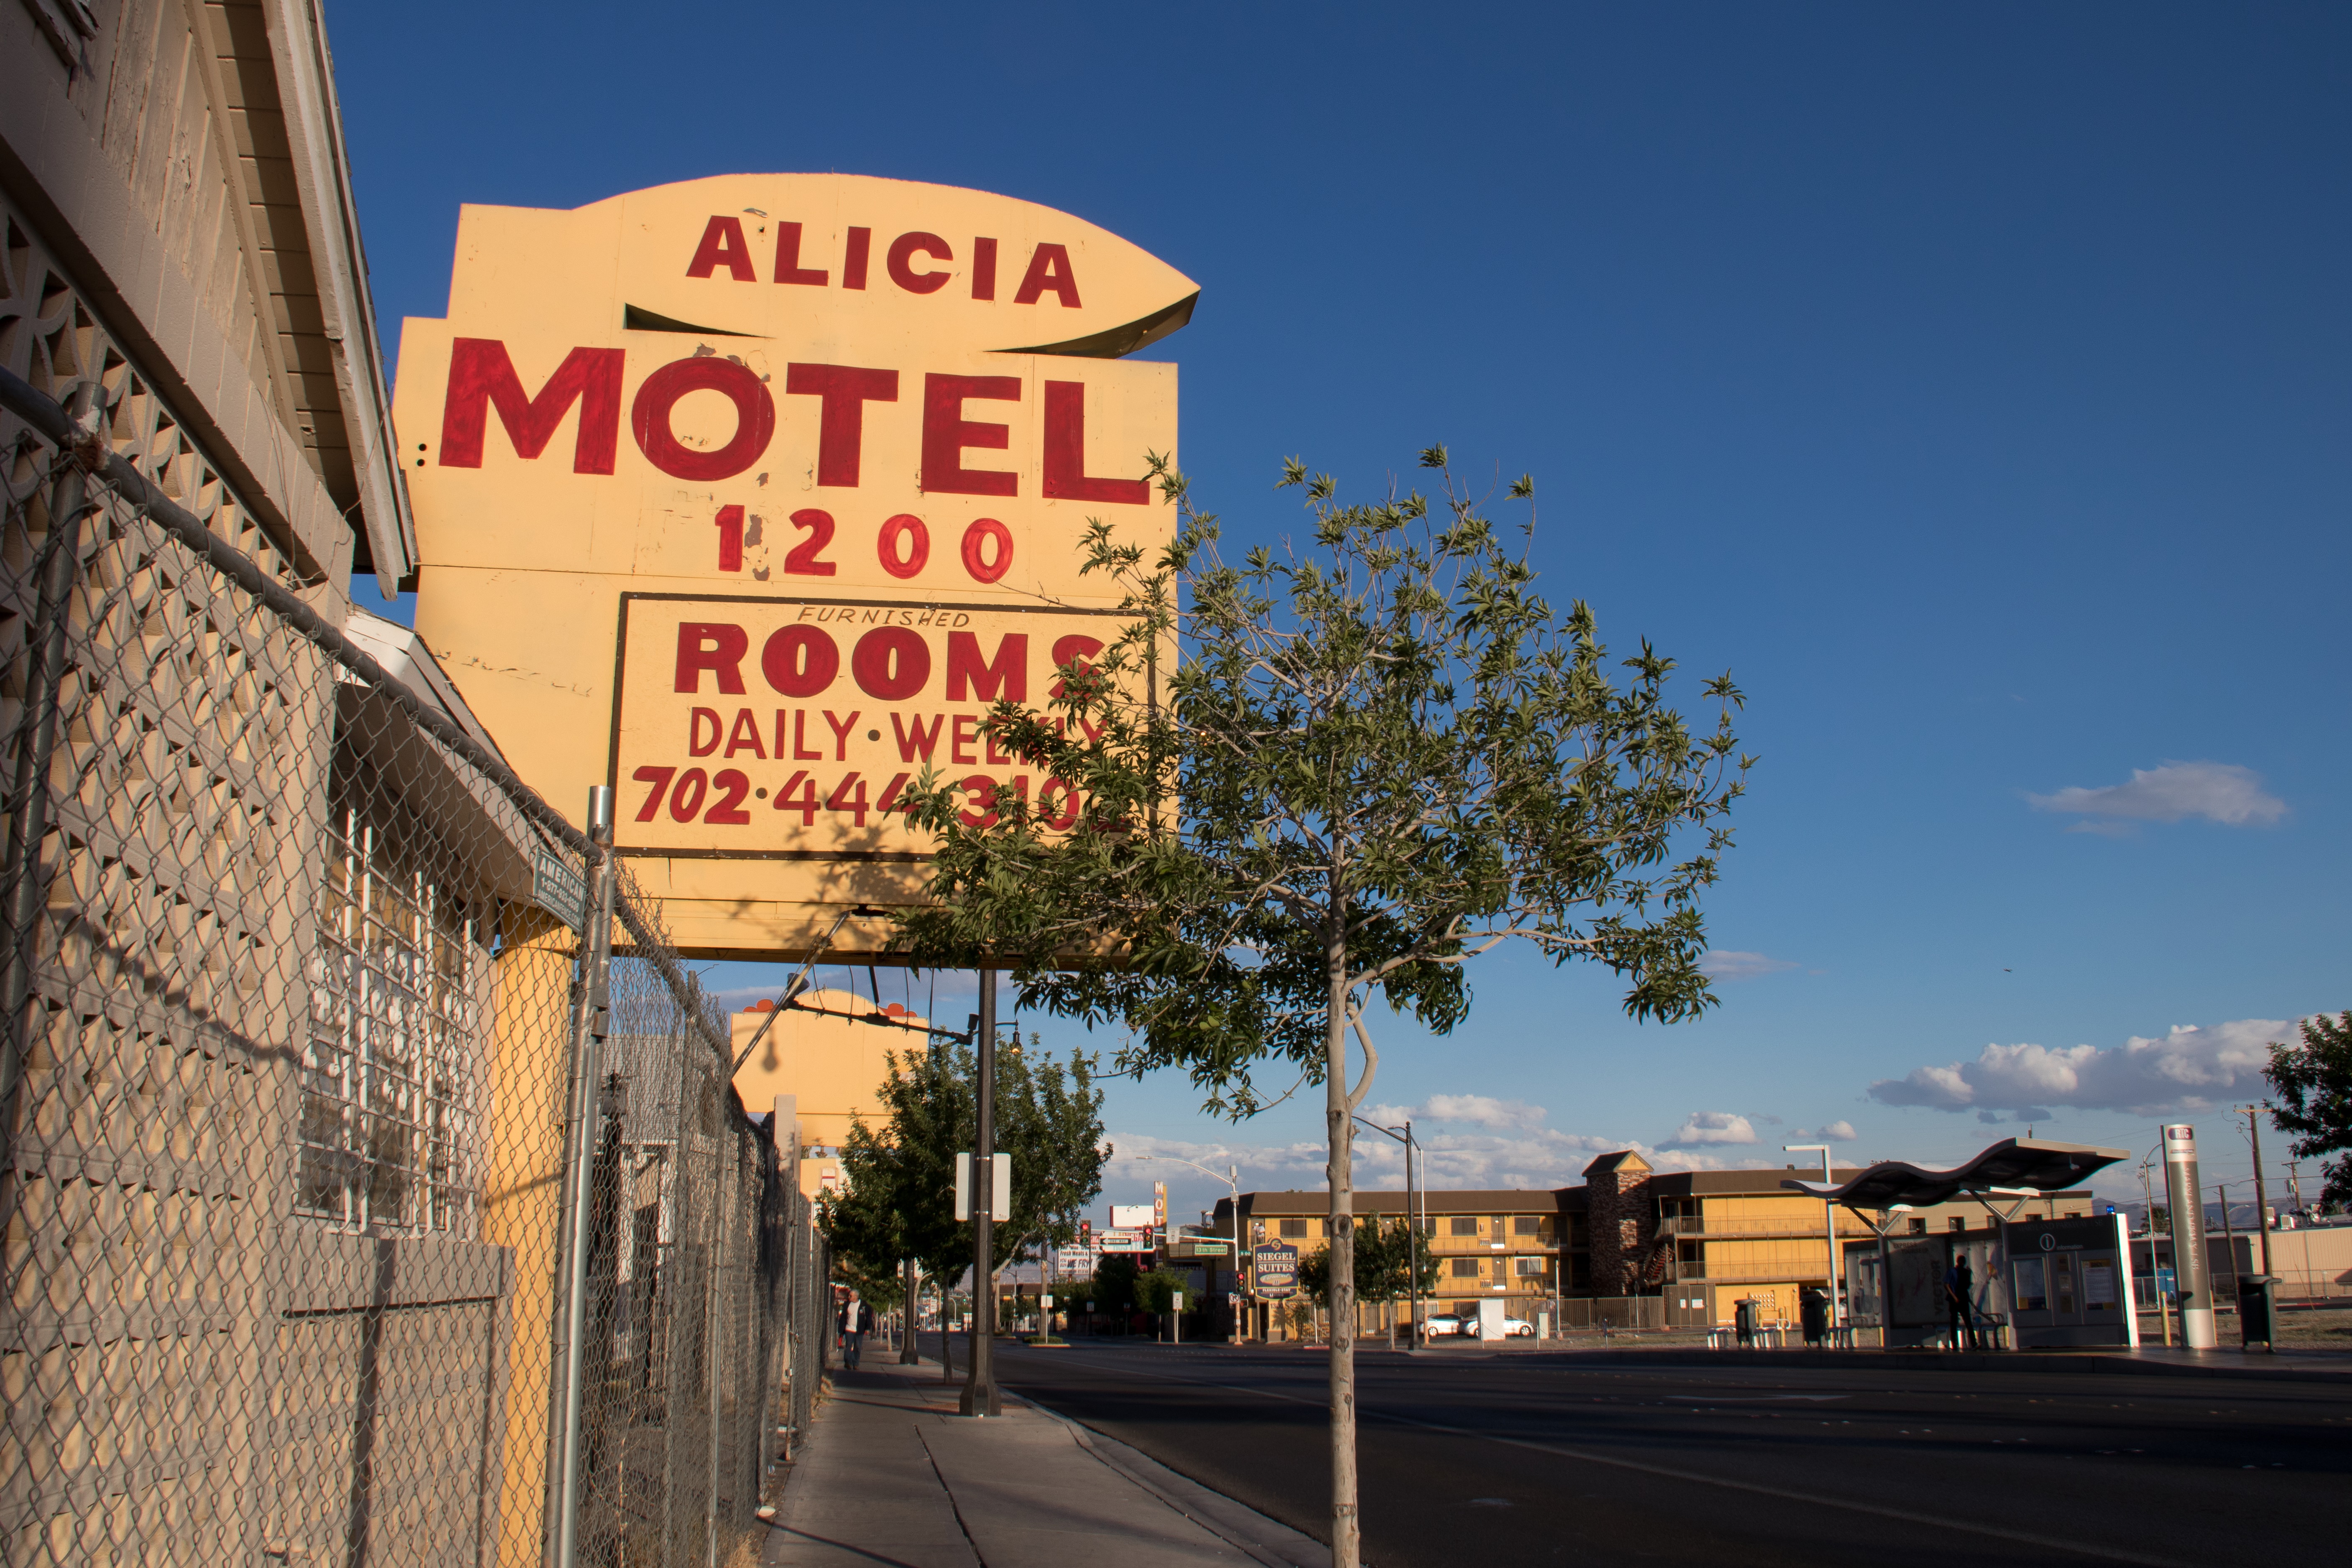 Photographs of Alicia Motel sign, Las Vegas (Nev.), April 18, 2017